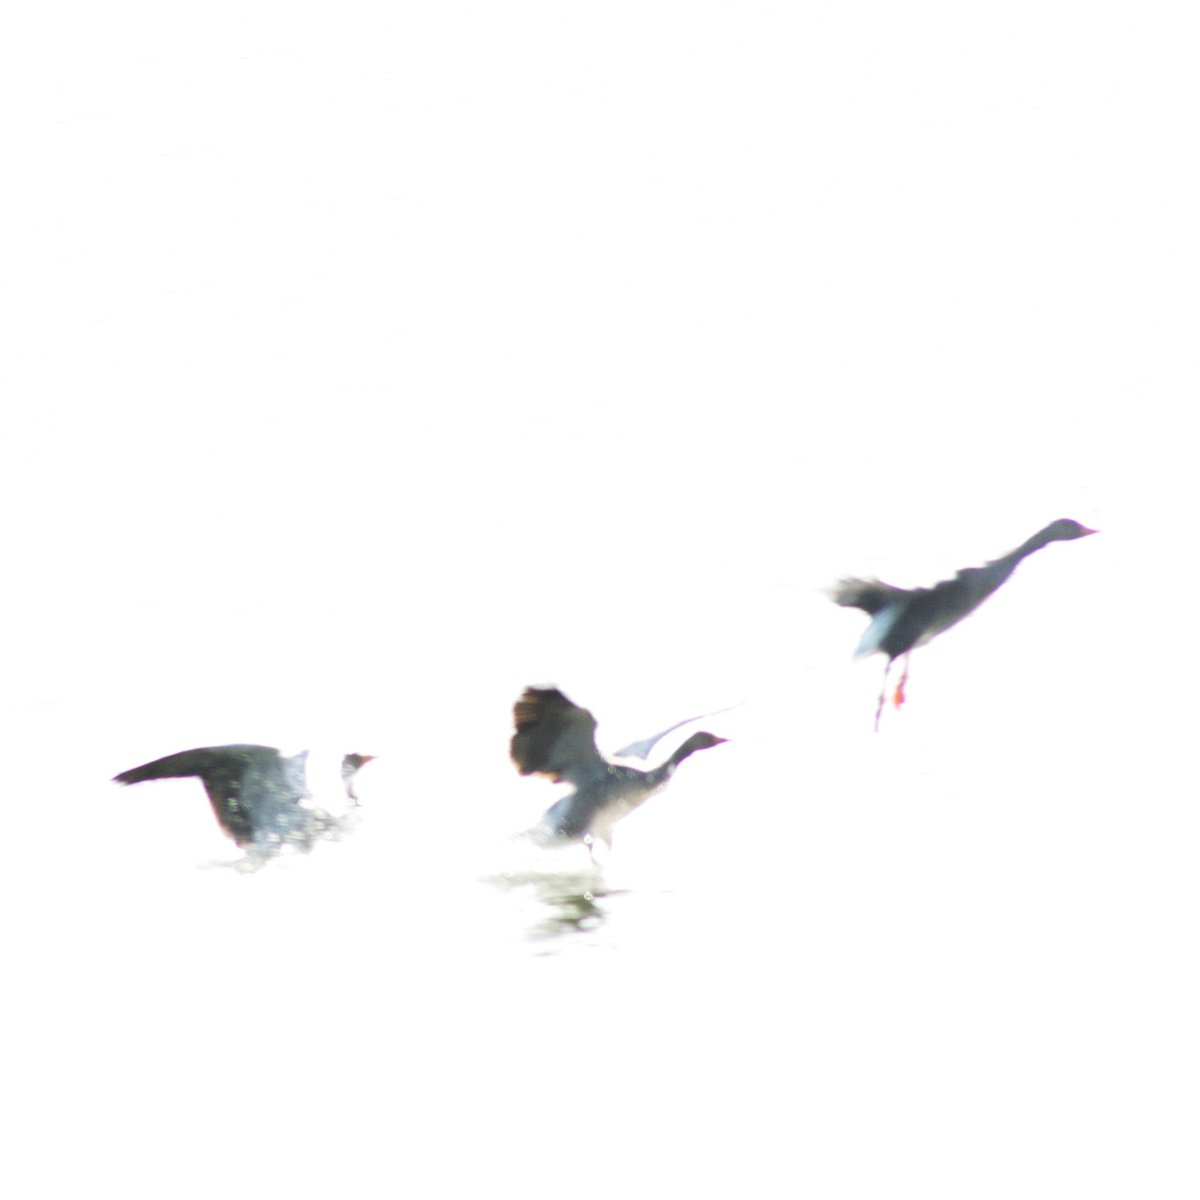 Geese in flight, minimalist wildlife scene by oconnart